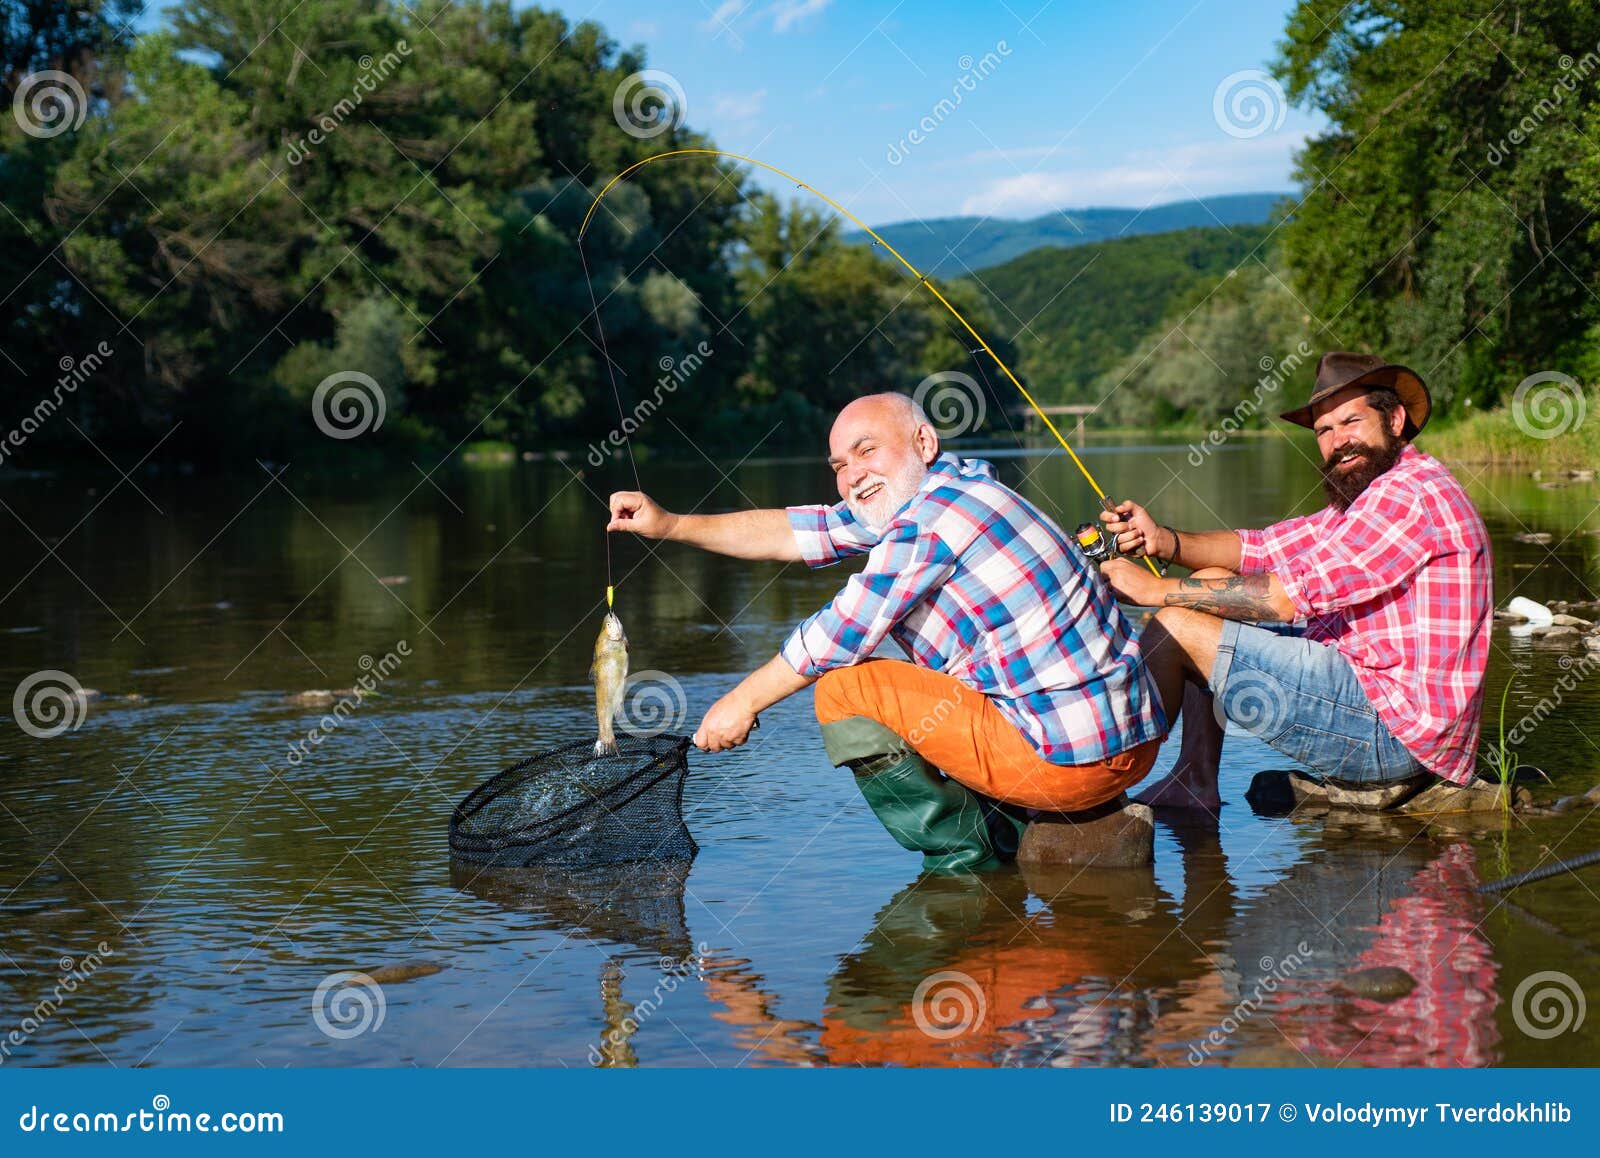 Catching Fish. Two Men Friends Fisherman Fishing on River Stock